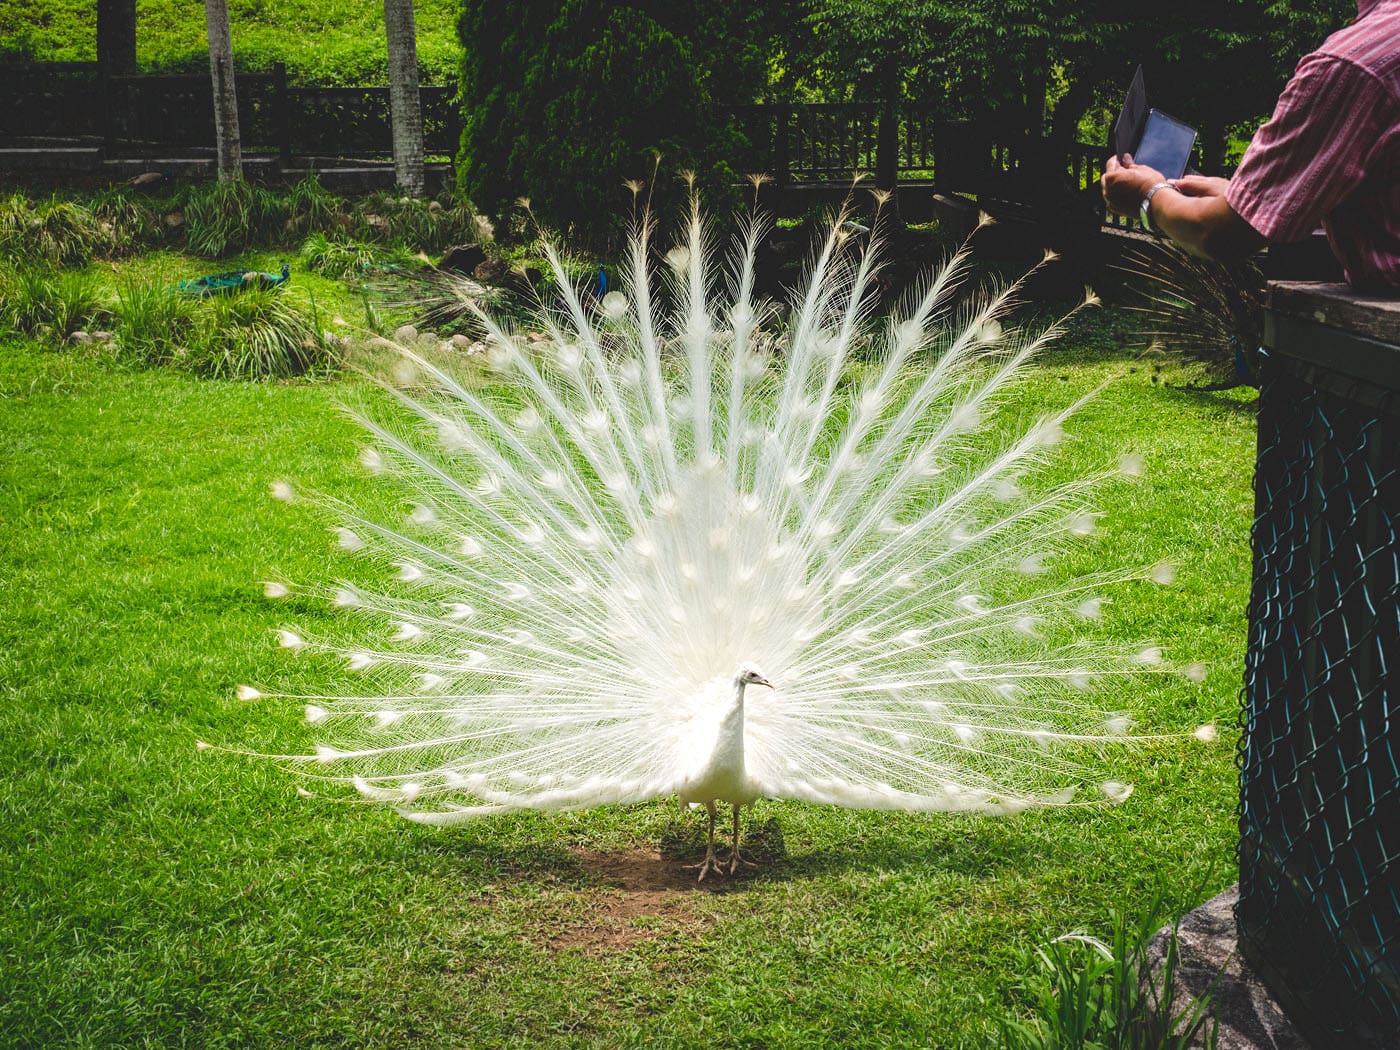 Taiwan - Peacock Garden - Beautiful white peacock